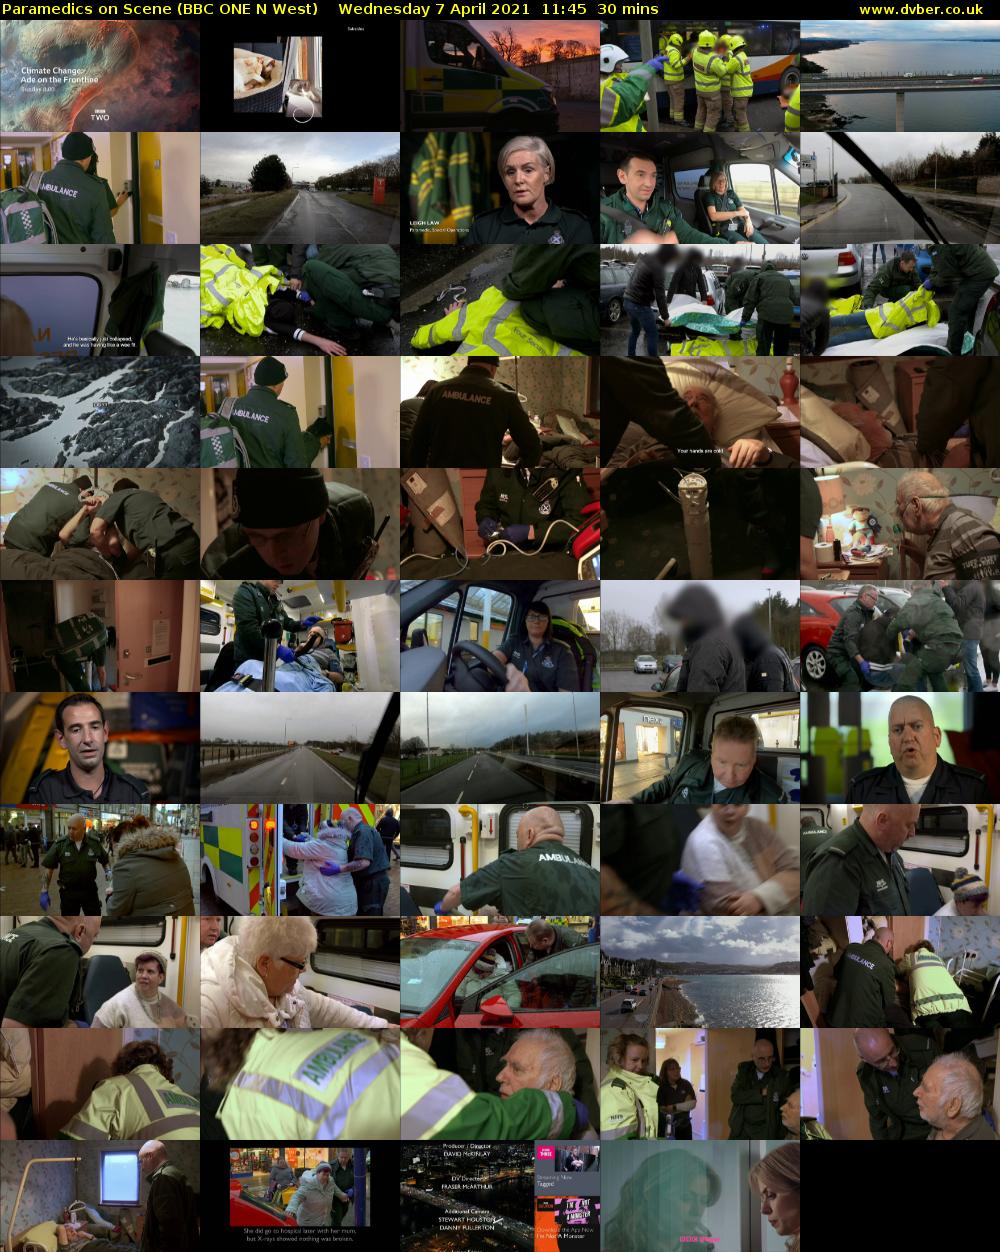 Paramedics on Scene (BBC ONE N West) Wednesday 7 April 2021 11:45 - 12:15